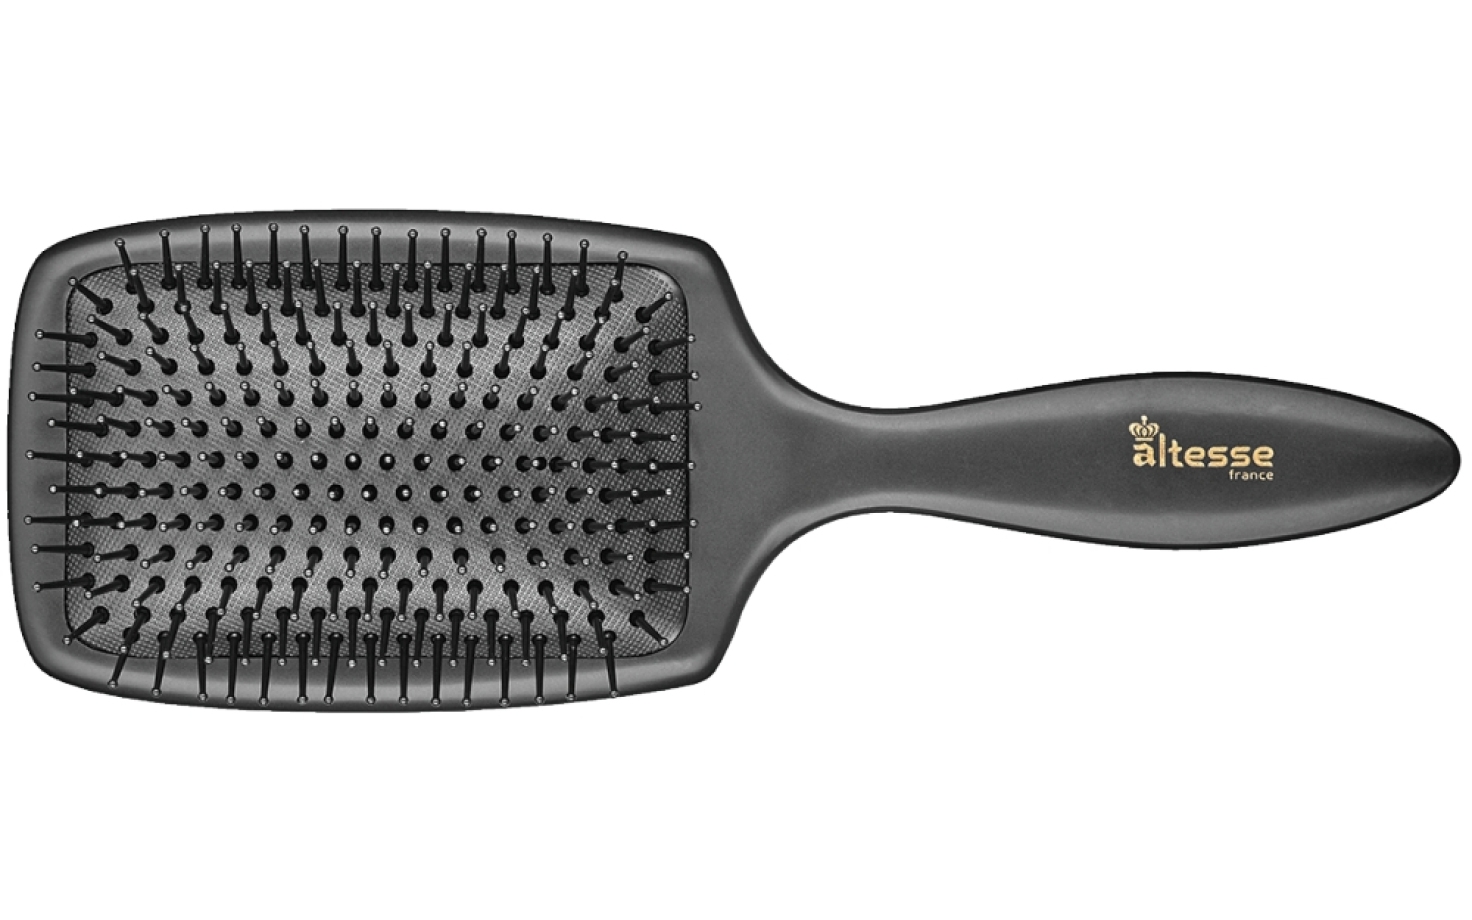 Altesse Paddle Brush 45510